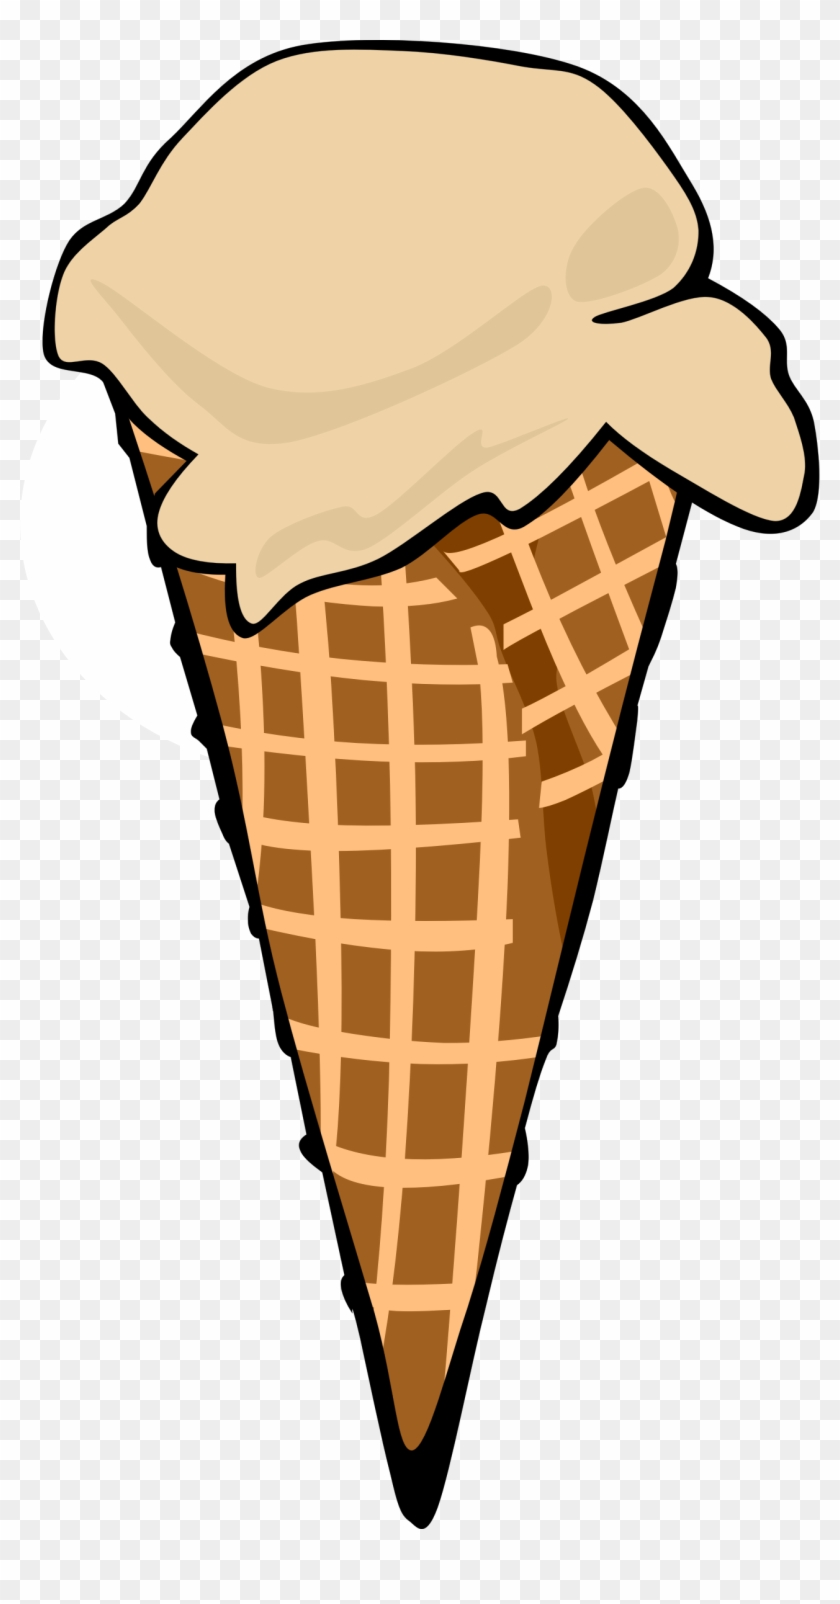 Ice Cream Cone Clipart - Ice Cream Clip Art #172816